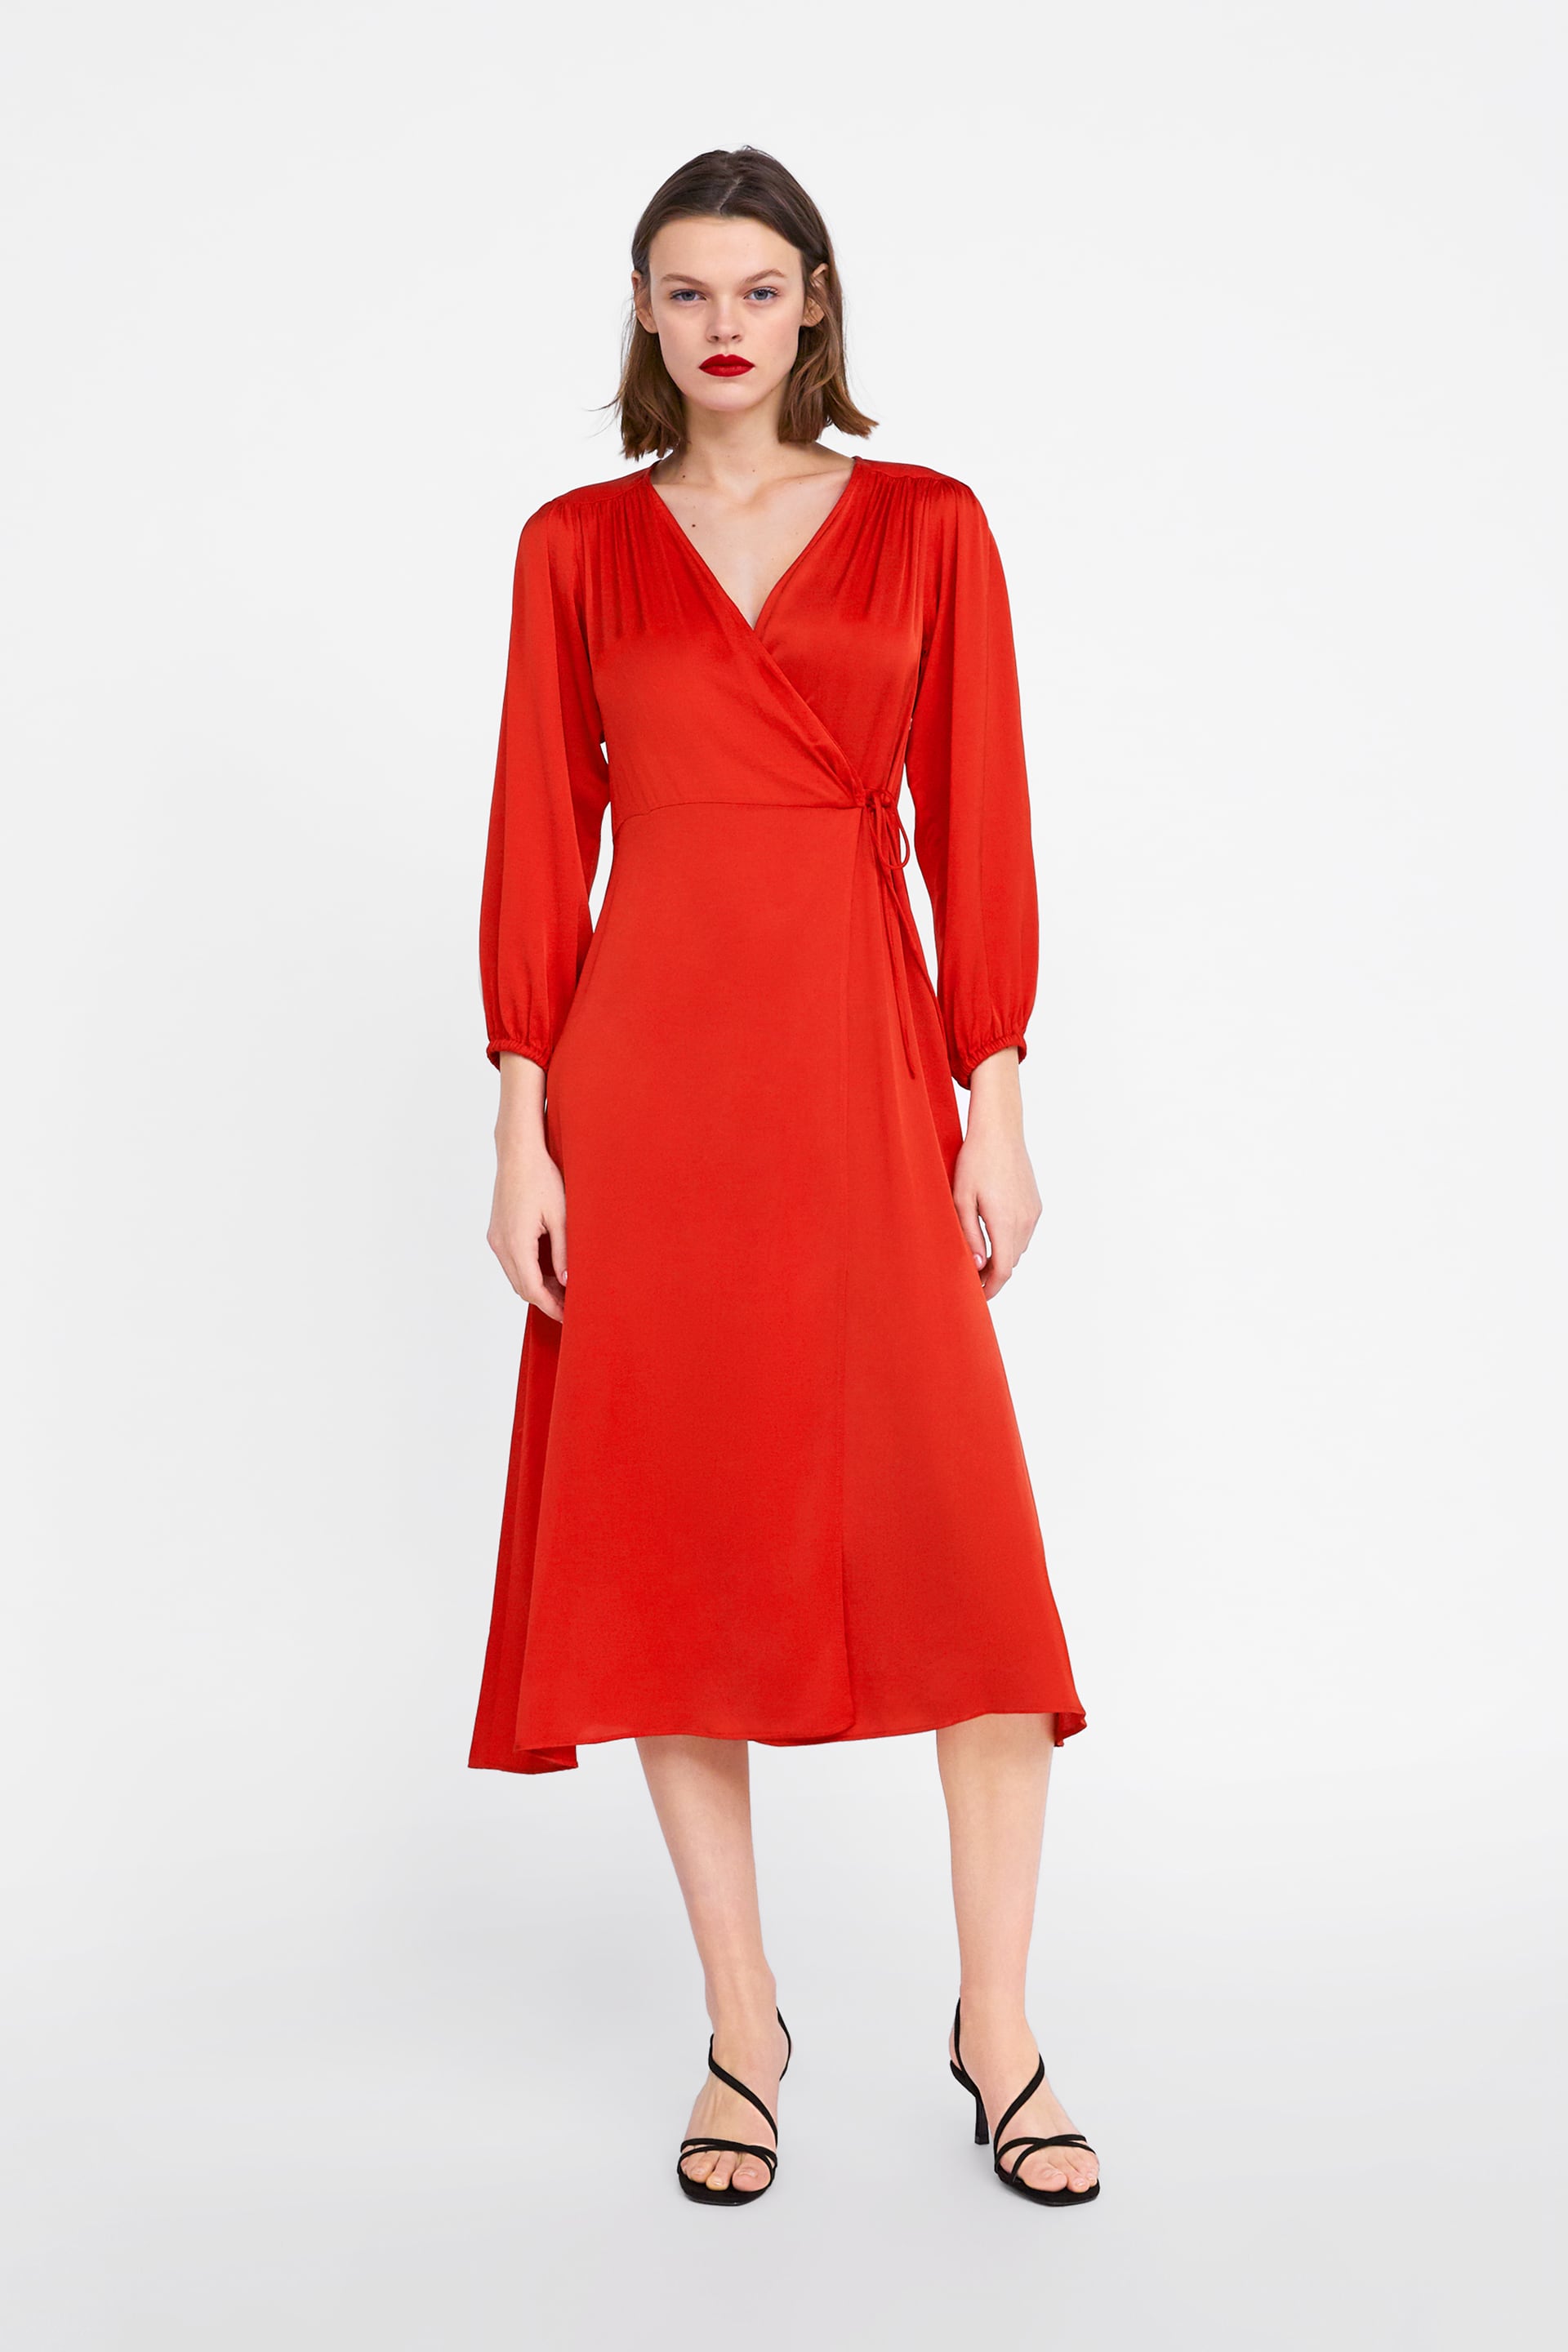 red dress zara 2019